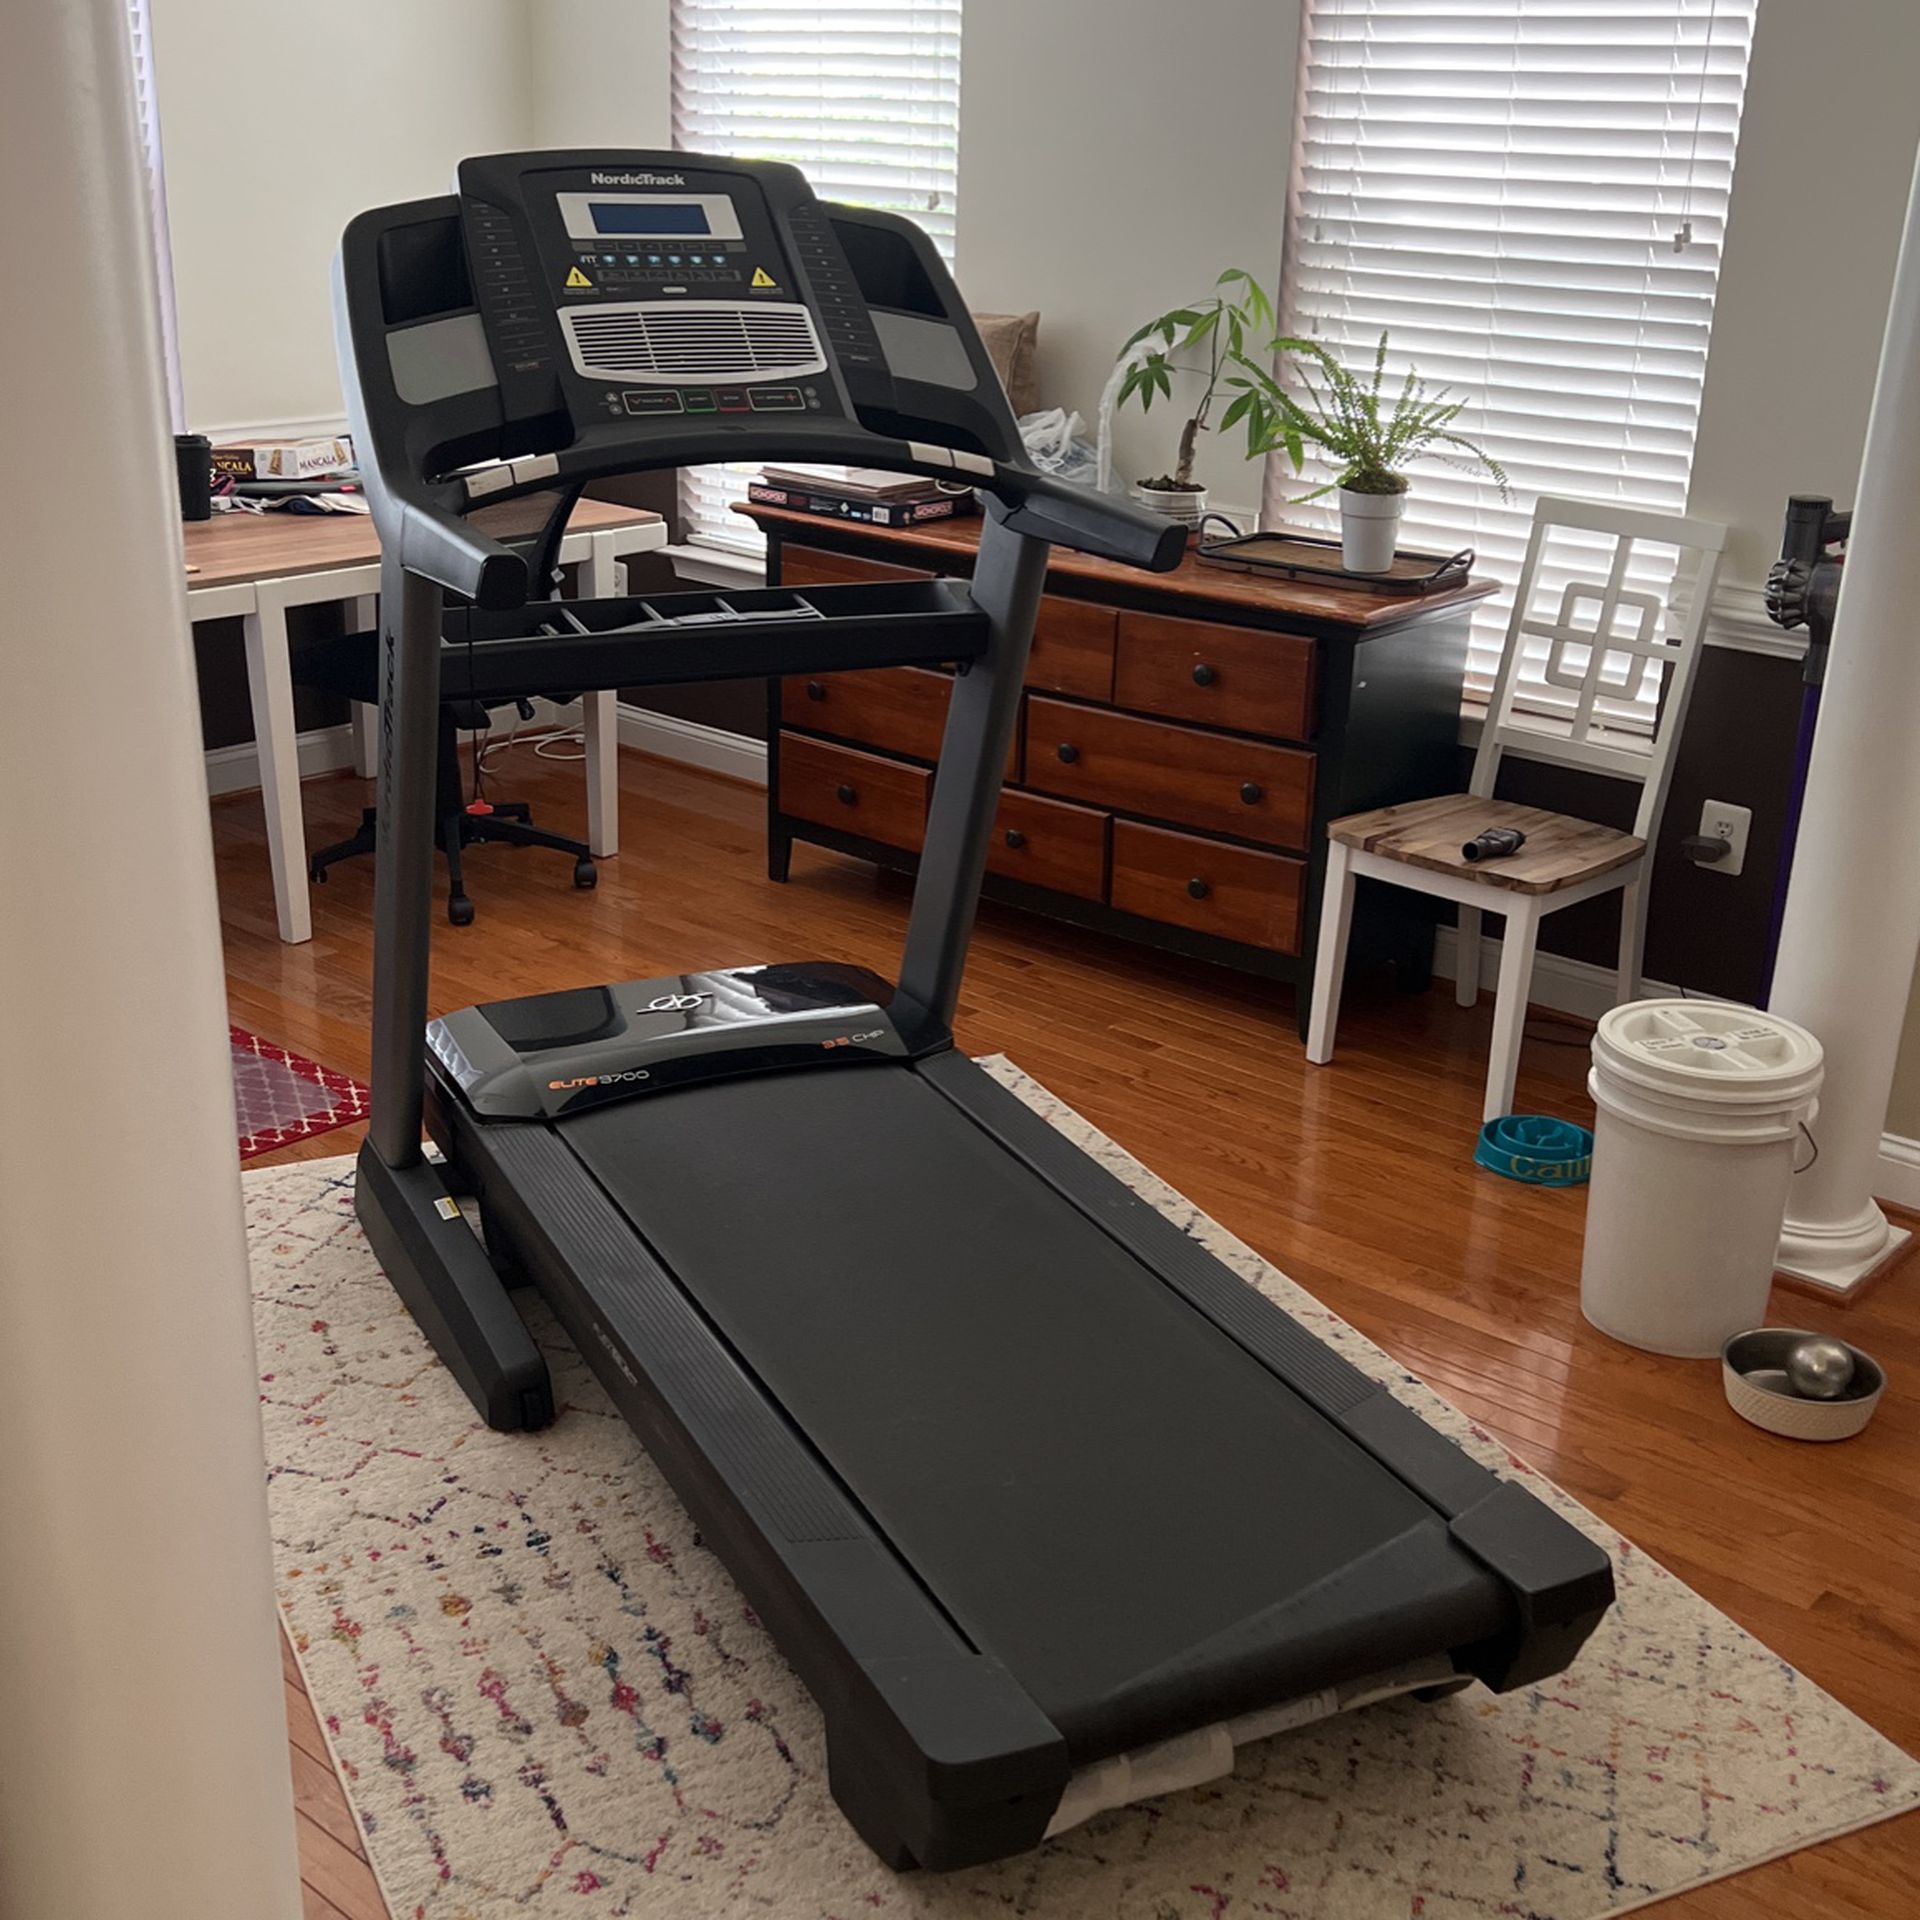 NordicTrac Treadmill Elite 3700